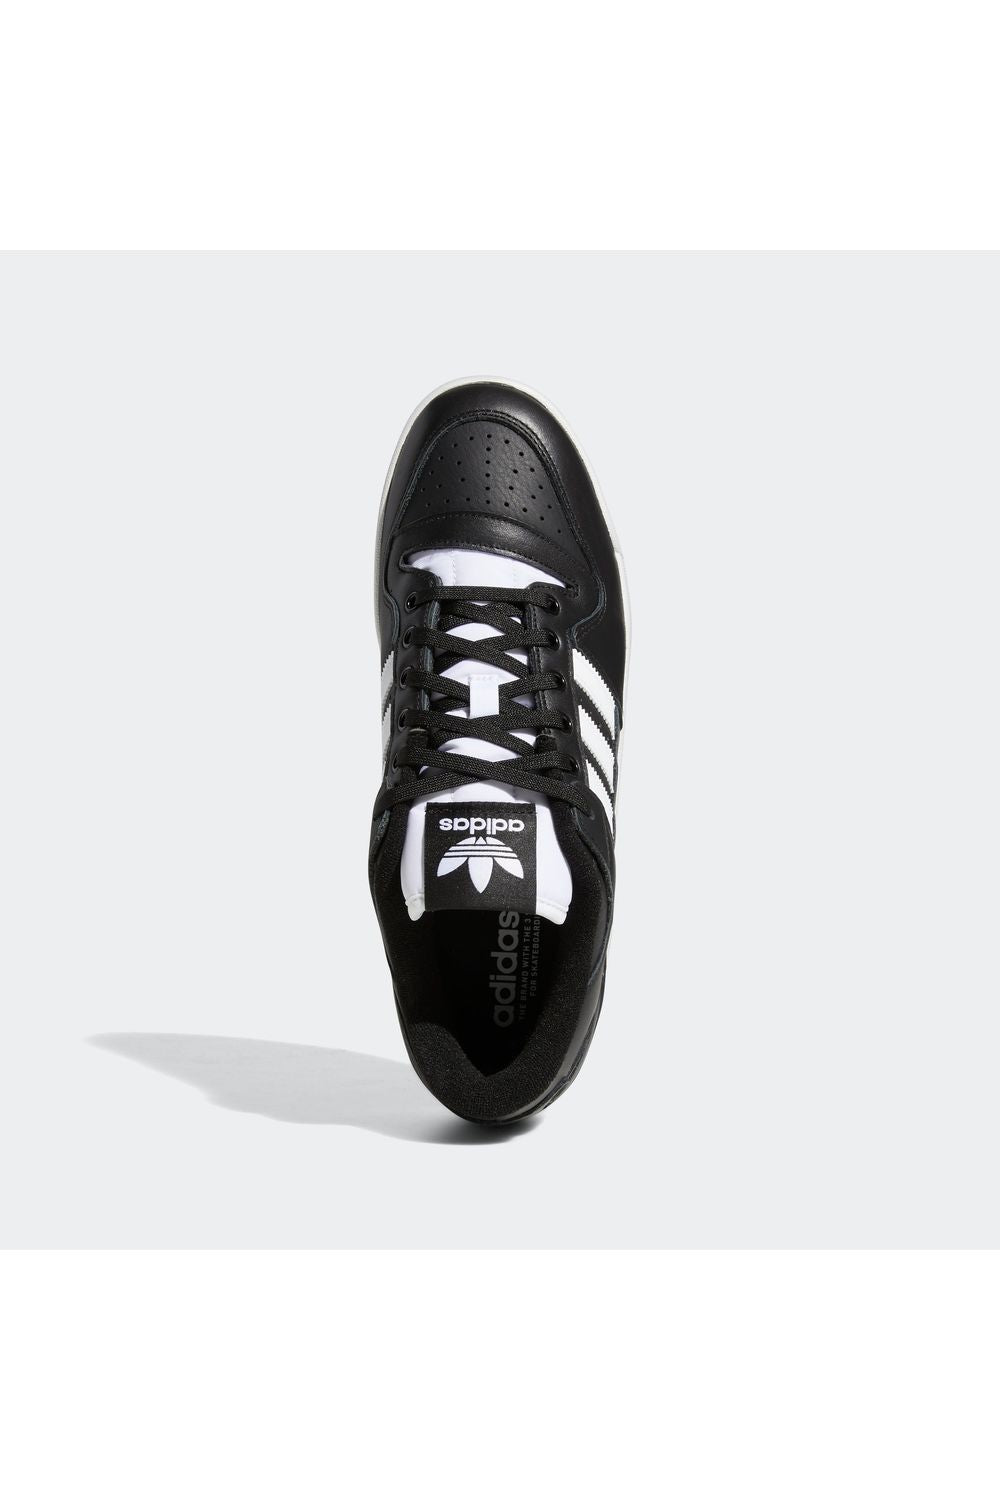 Adidas Forum 84 Low ADV Shoes